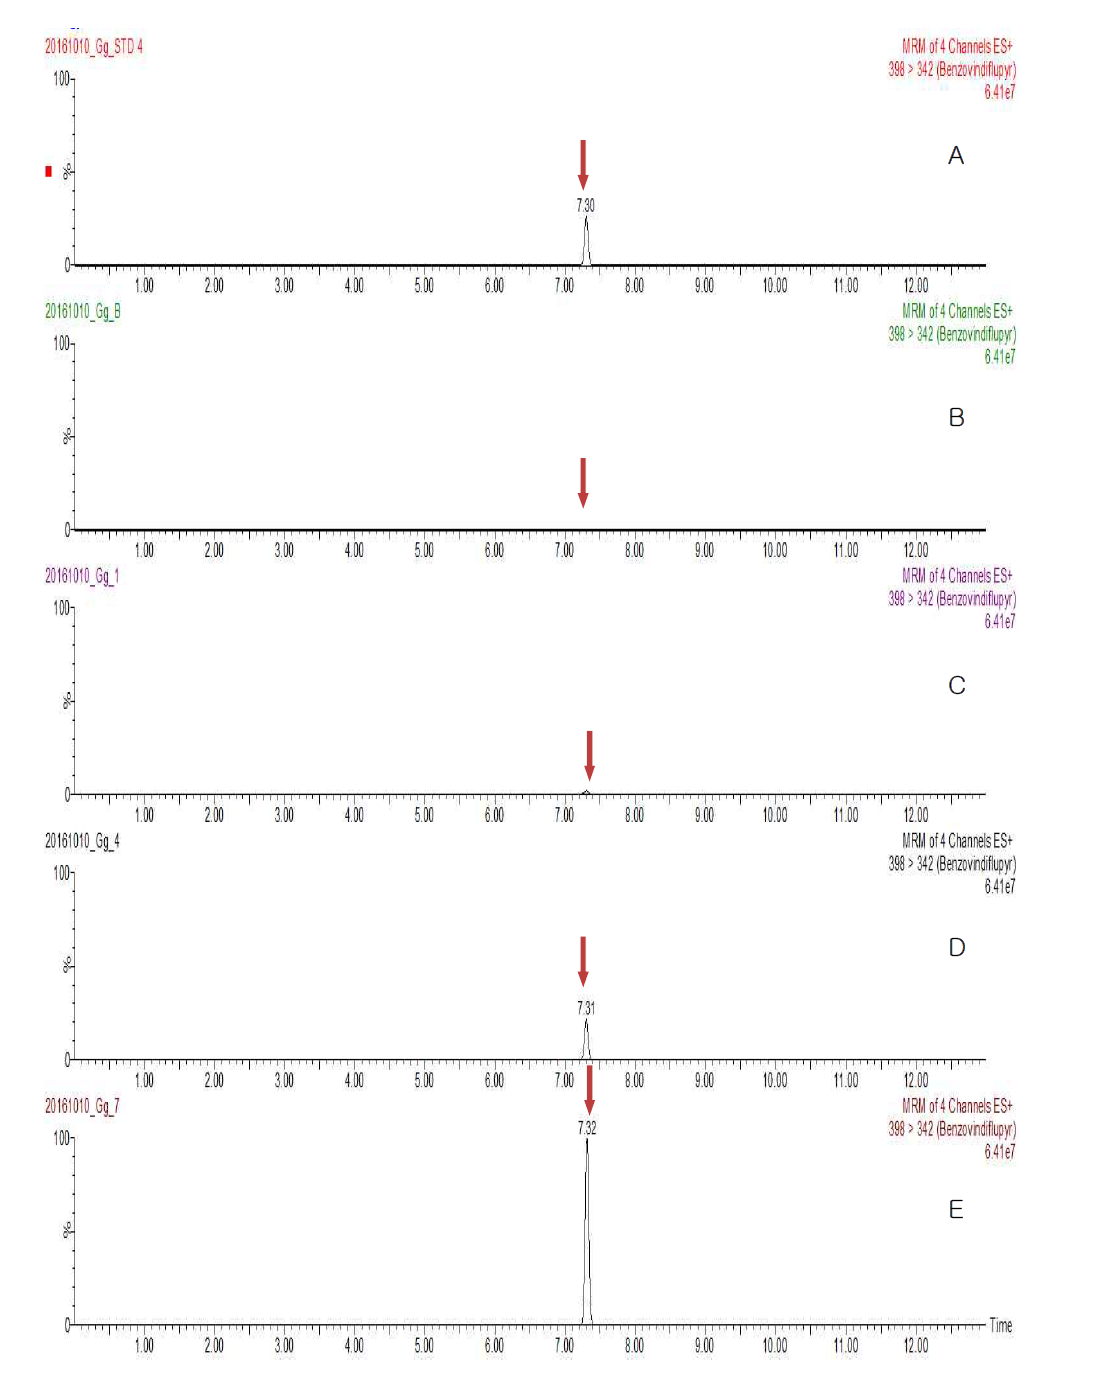 Representative MRM(quantification ion) chromatograms of Benzovindiflupyr corresponding to: (A) standard solution at 0.05 mg/kg, (B) Tangerine control, (C) spiked at 0.005 mg/kg, (D) spiked at 0.05 mg/kg and (E) spiked at 0.25 mg/kg